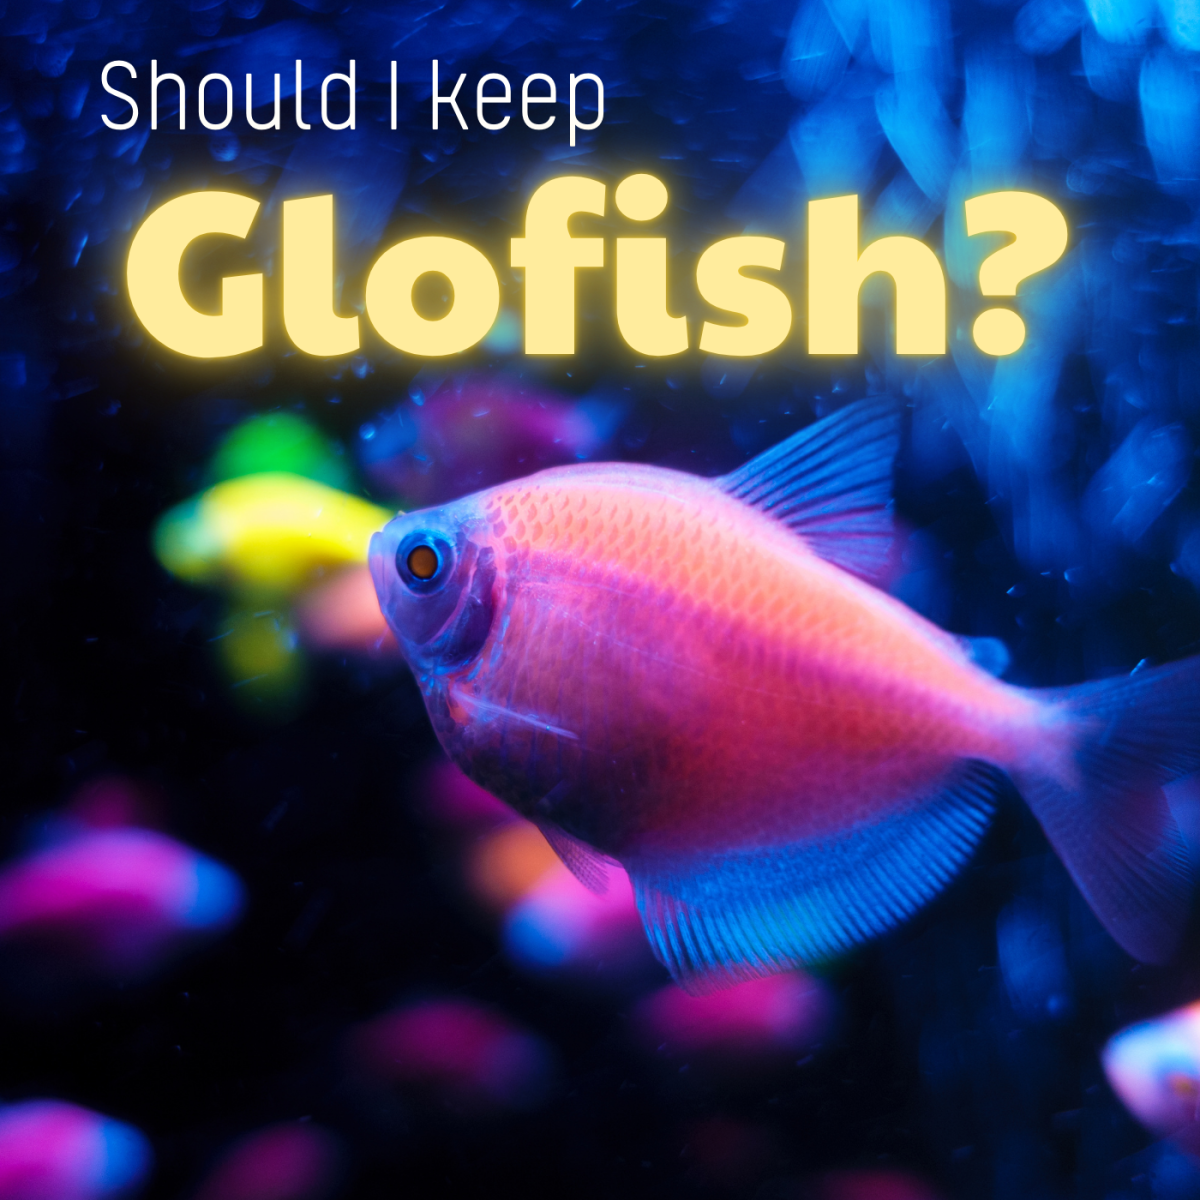 Is it OK to keep Glofish?